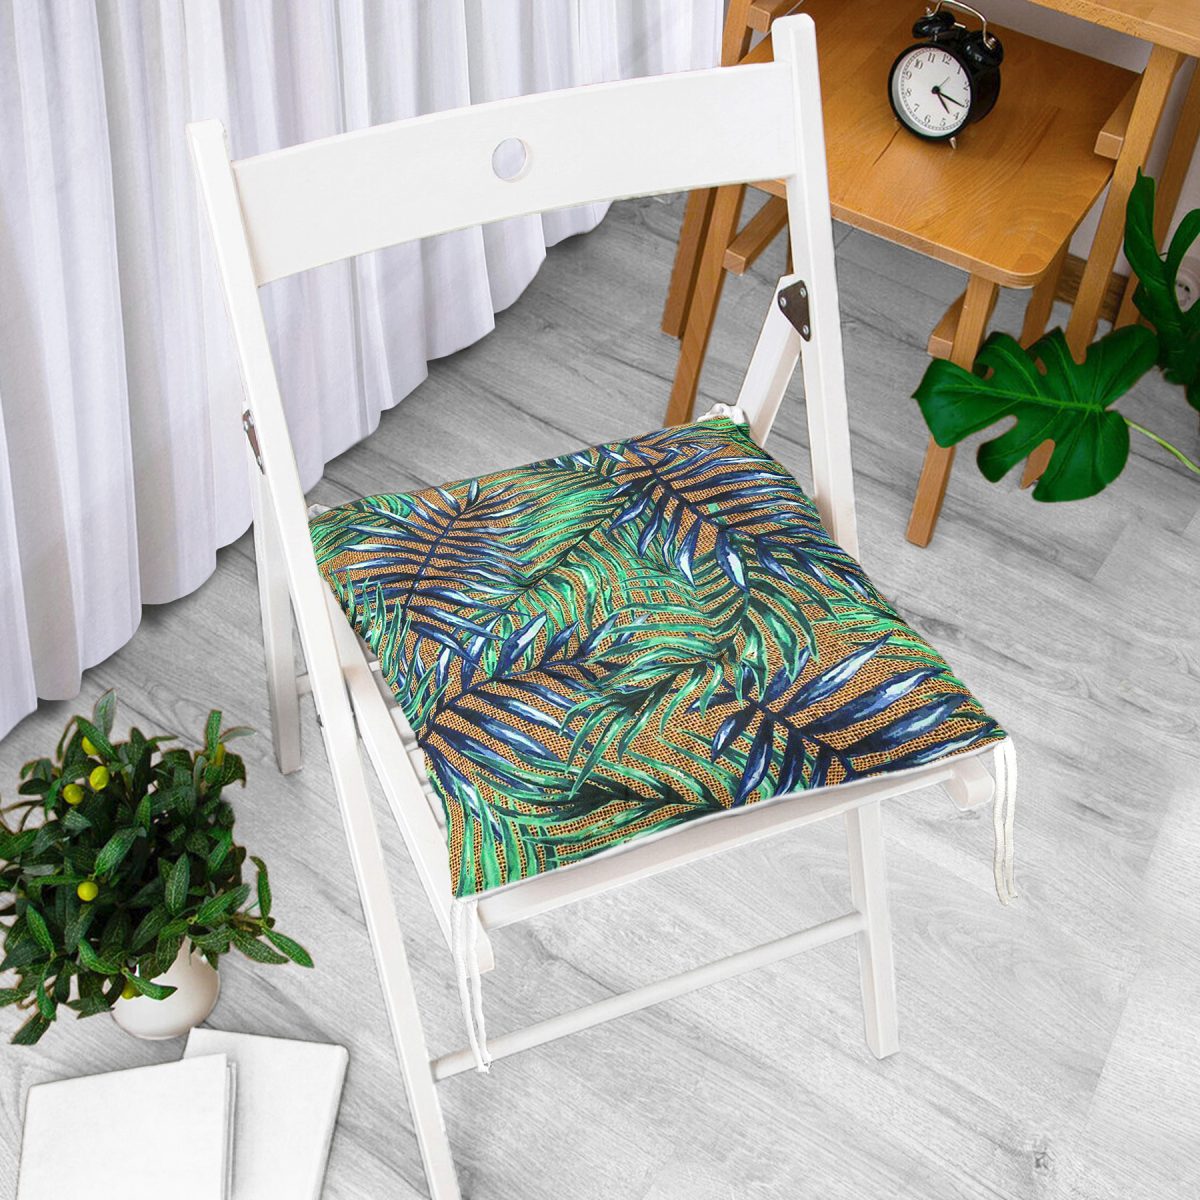 Çuval Zeminde Renkli Yapraklar Desenli Dekoratif Pofuduk Sandalye Minderi Realhomes